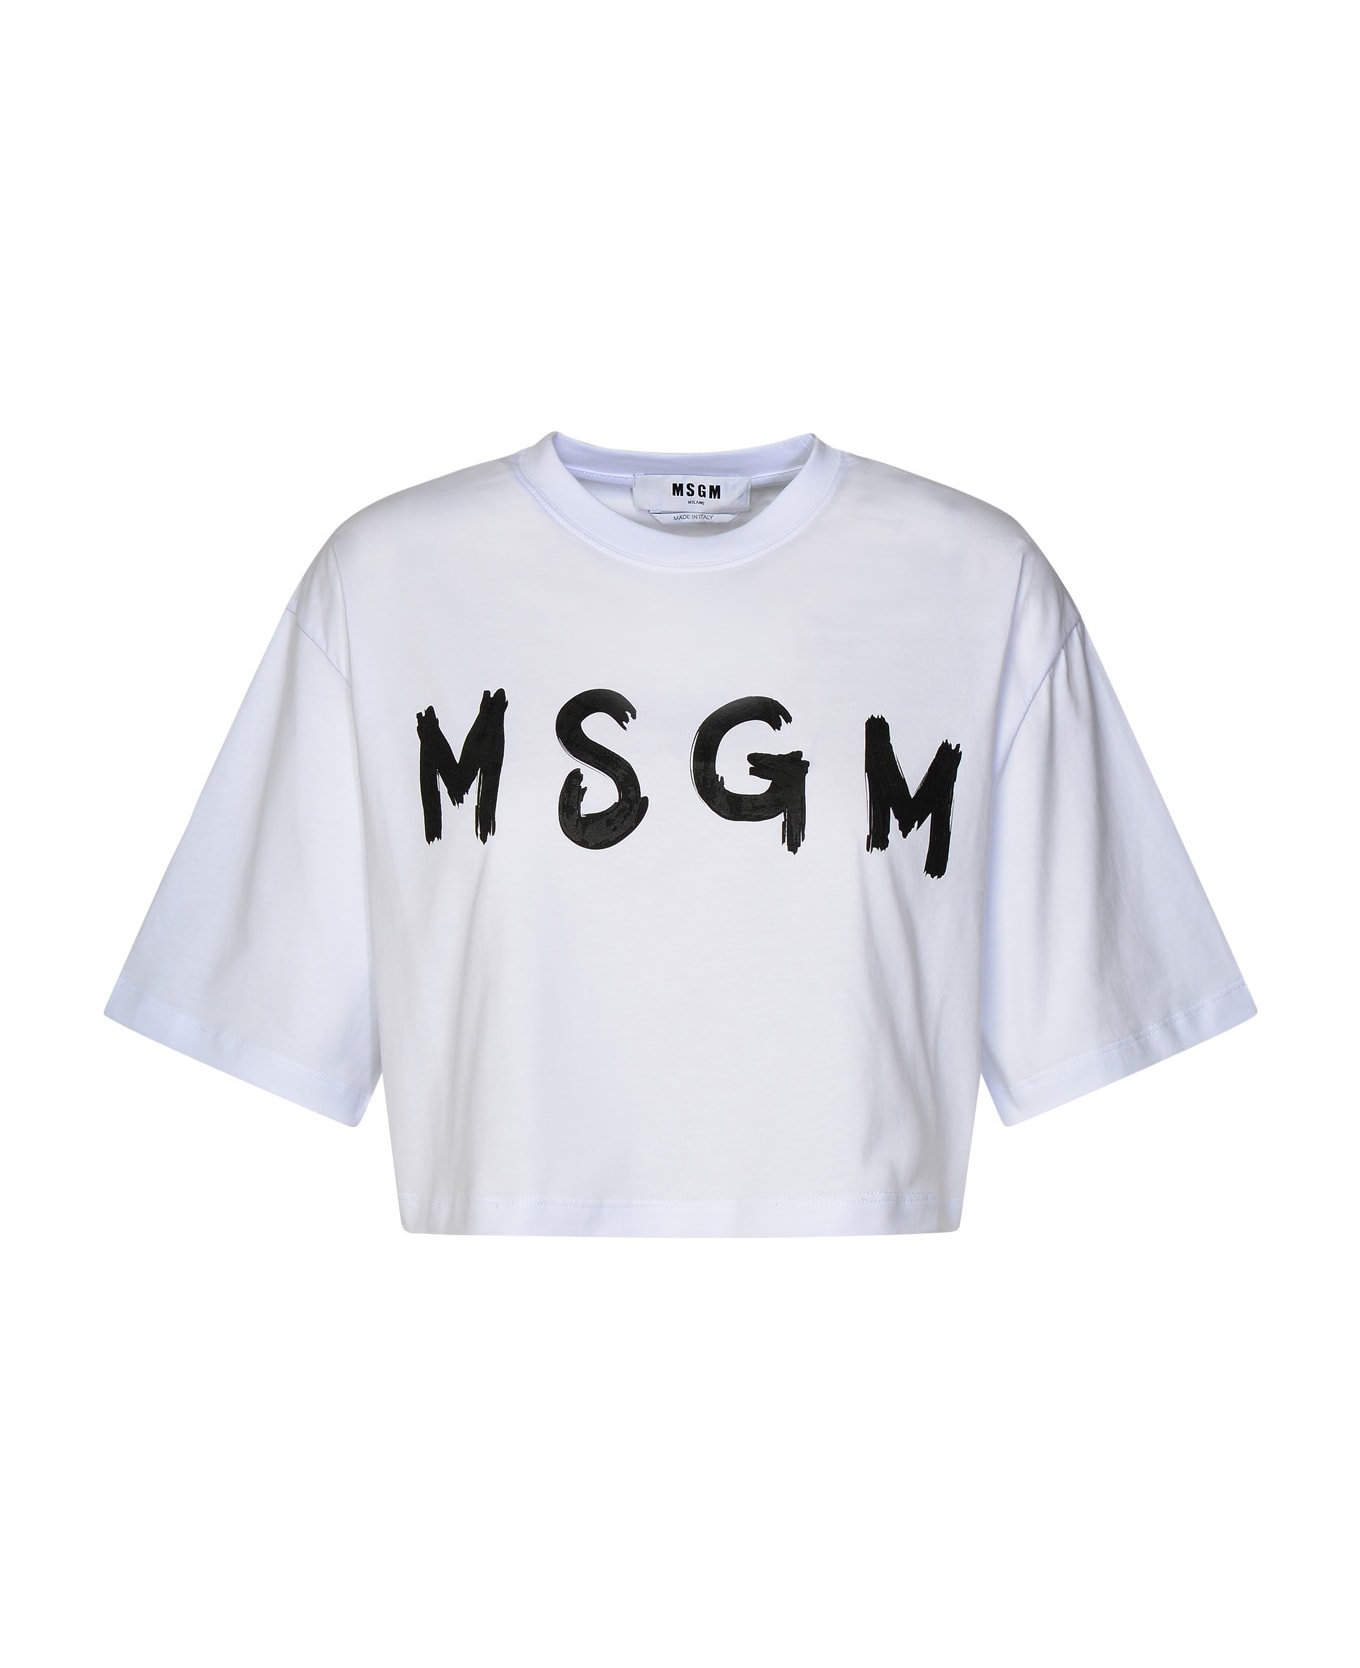 MSGM White Cotton T-shirt - Bianco